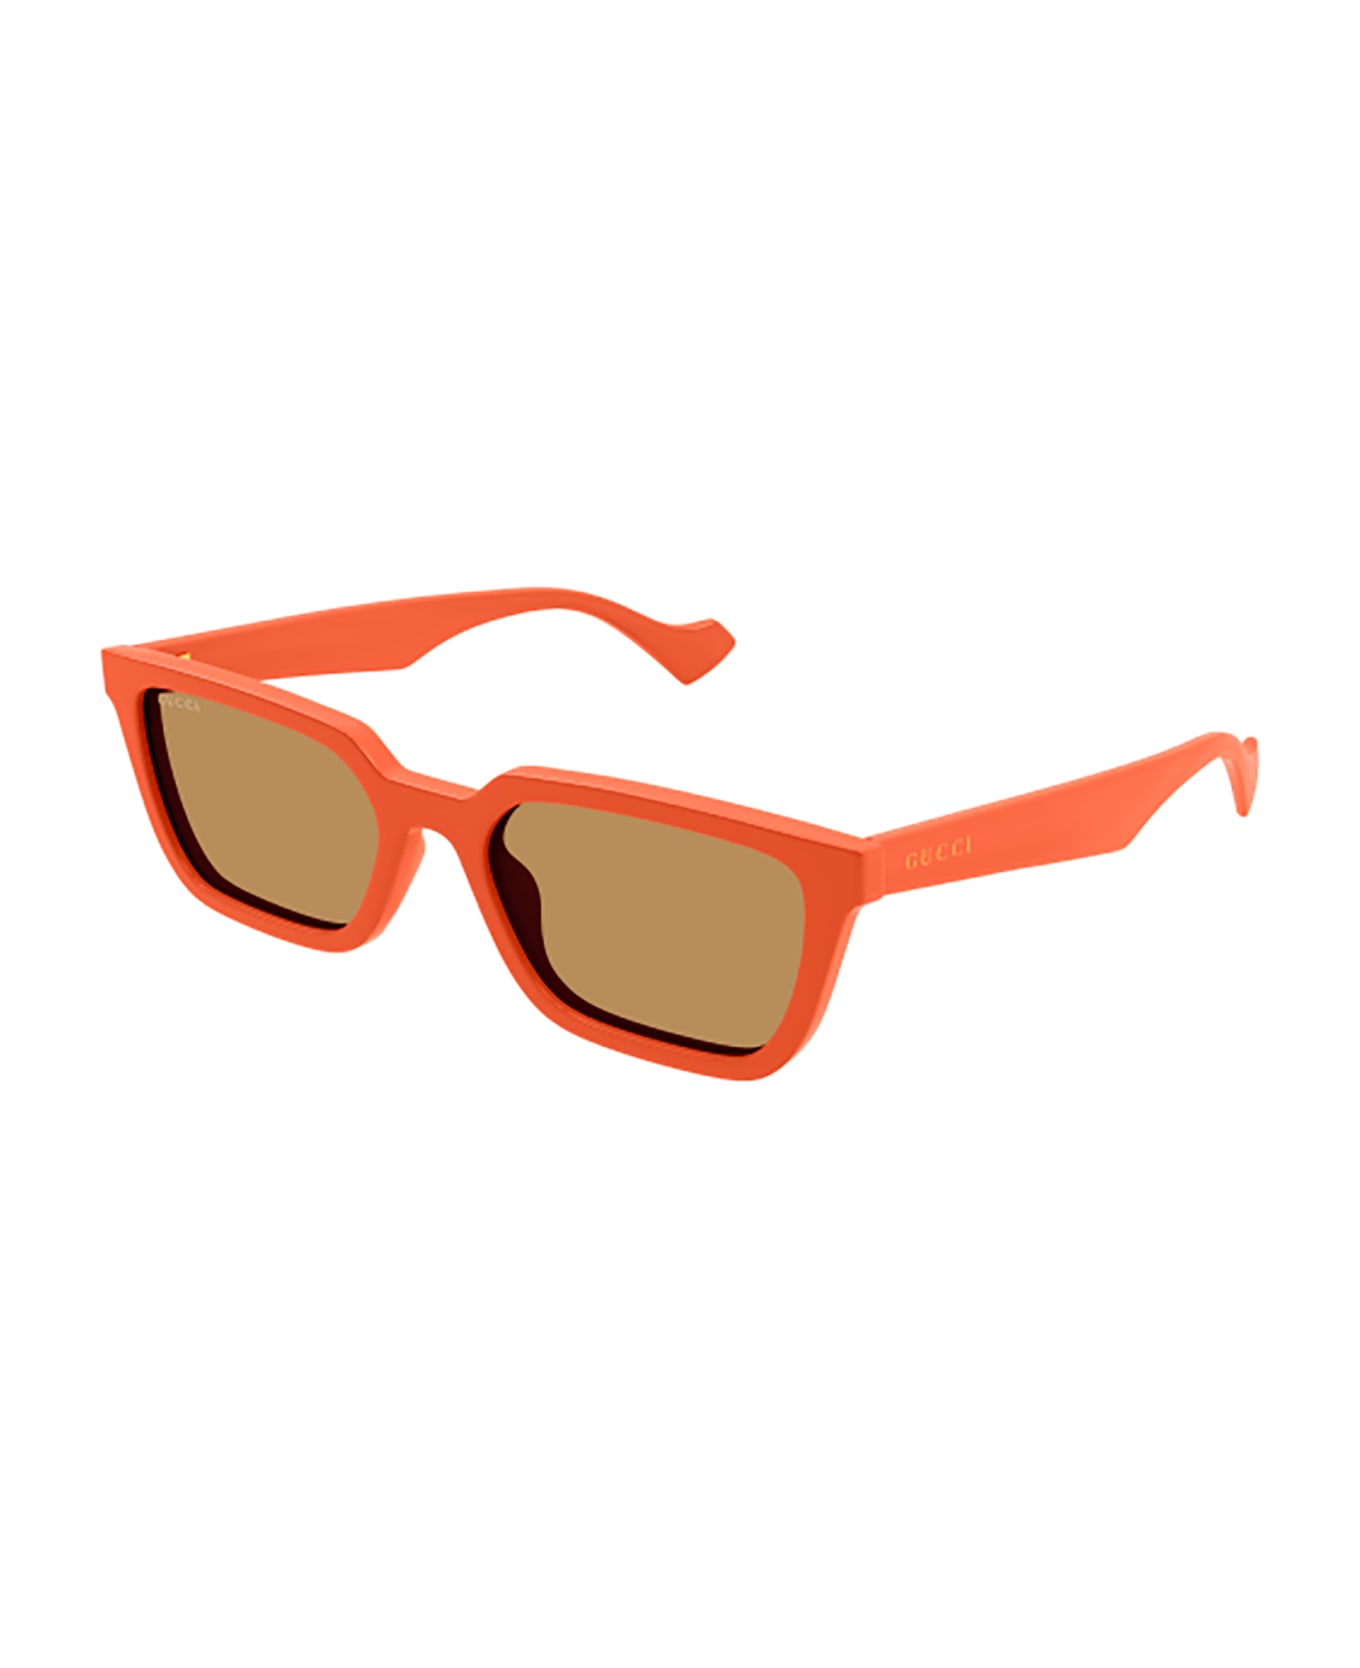 Gucci Eyewear GG1539S Sunglasses - Orange Orange Brown サングラス